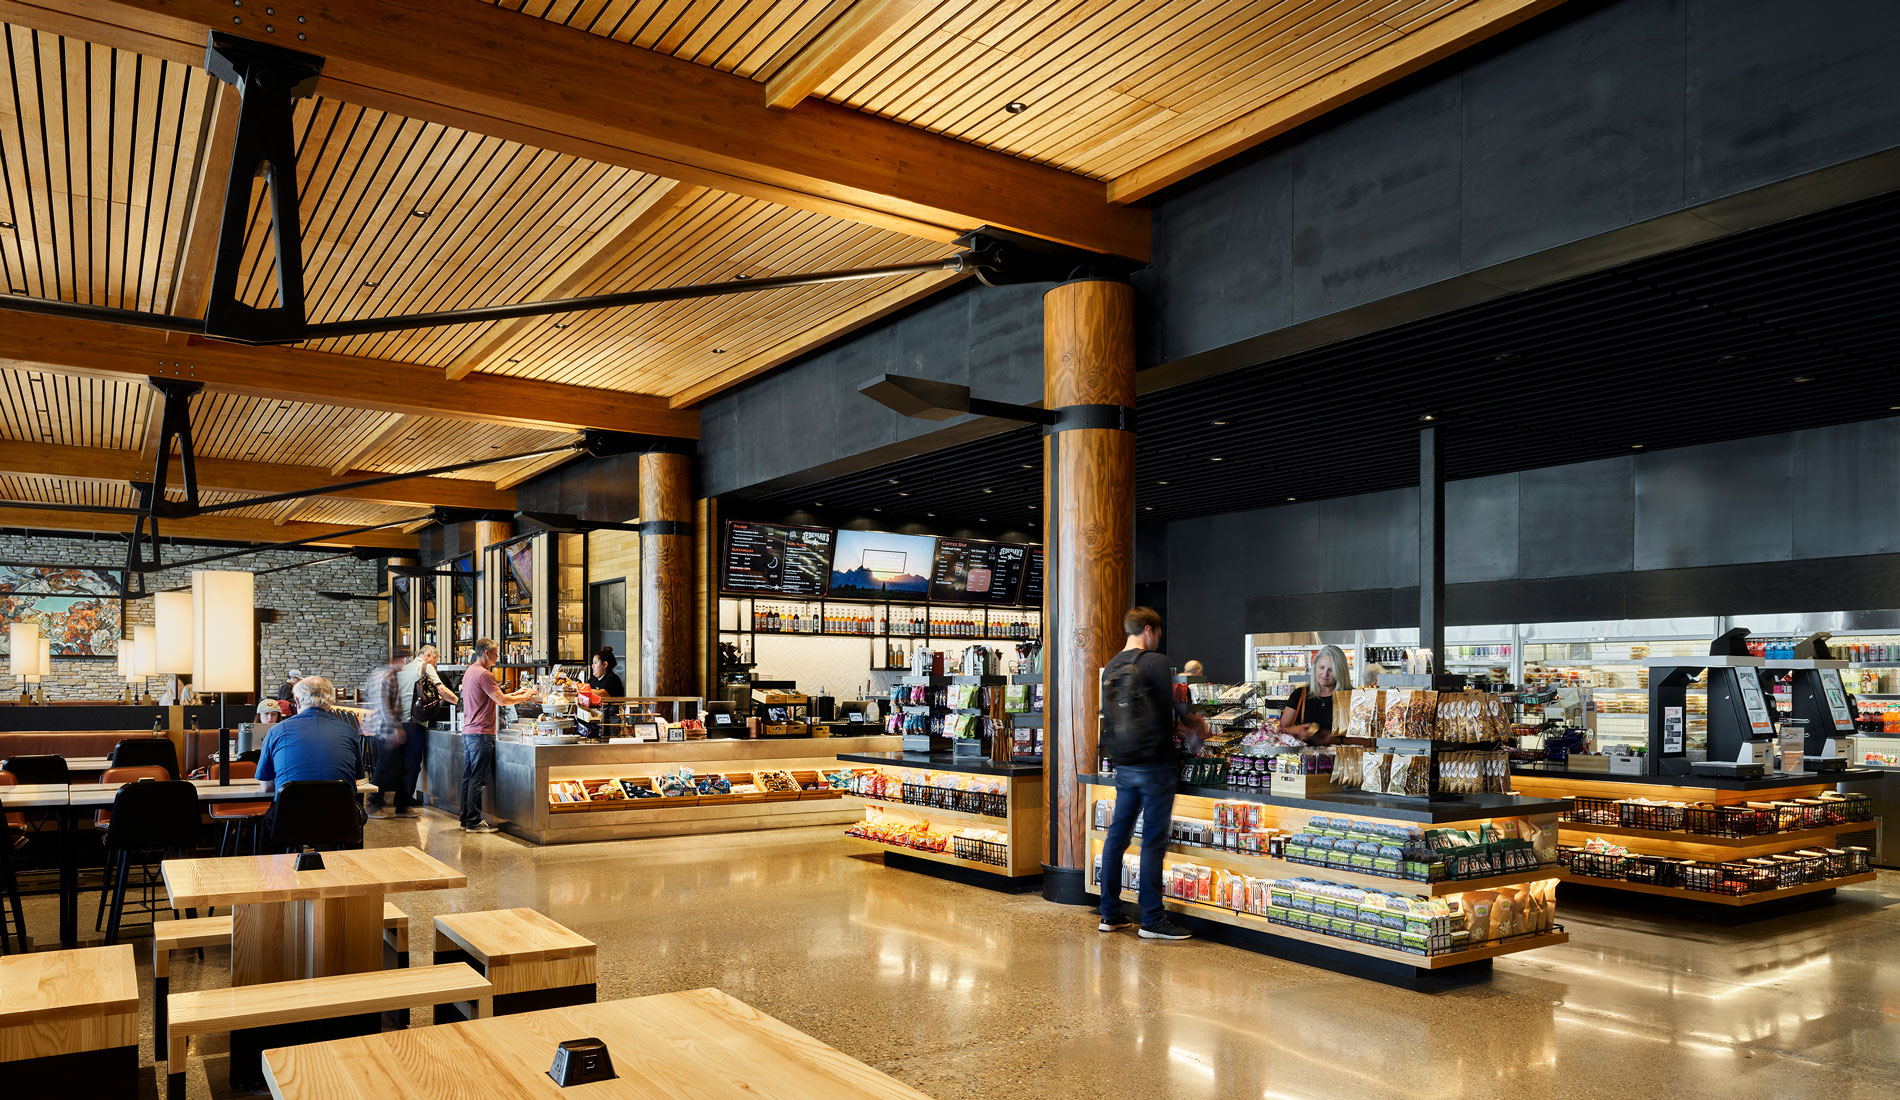 Jackson Hole Airport Main Terminal Restaurant and Retail areas